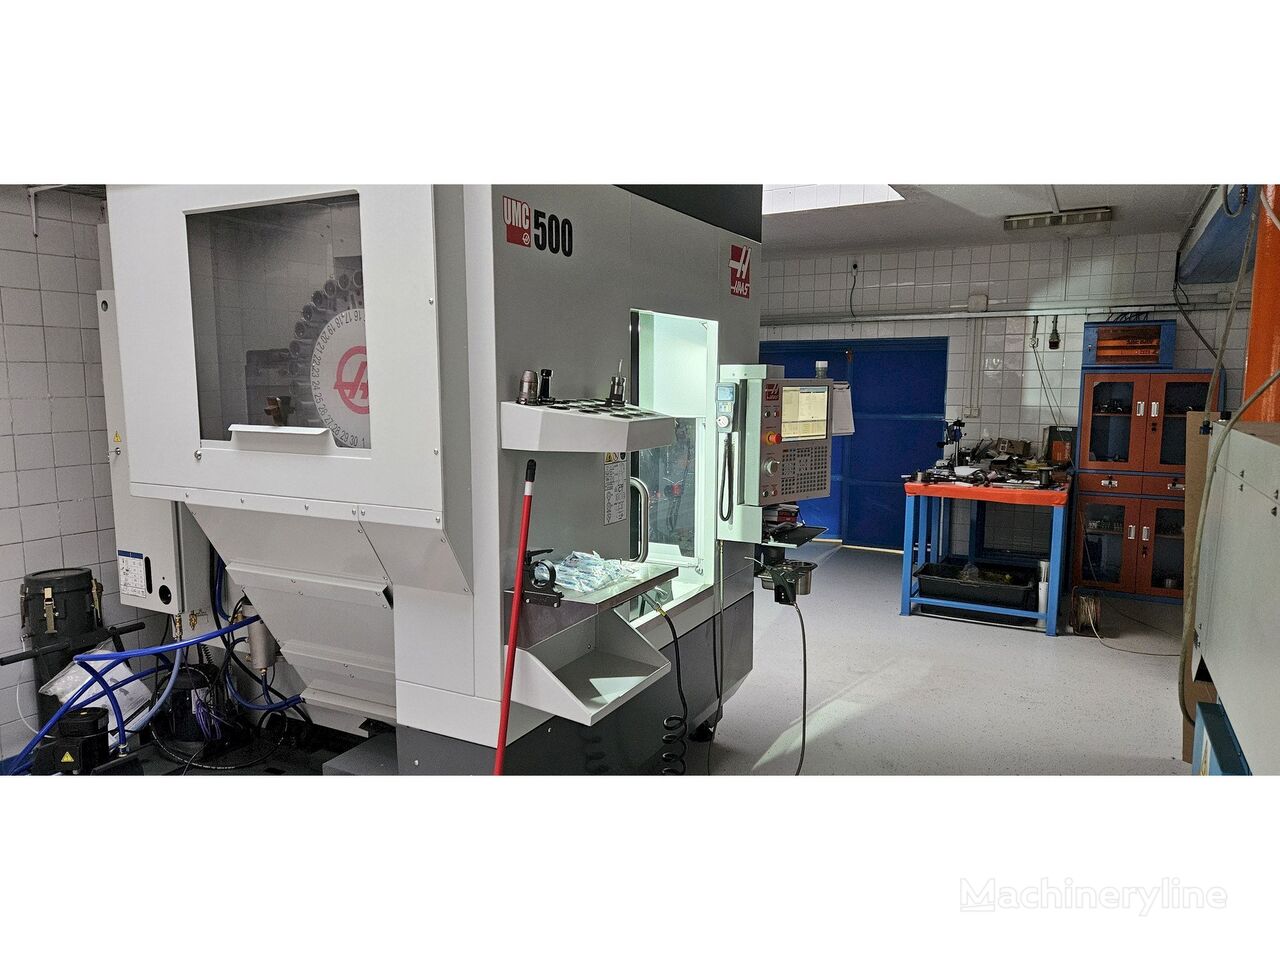 Haas UMC-500 machining centre